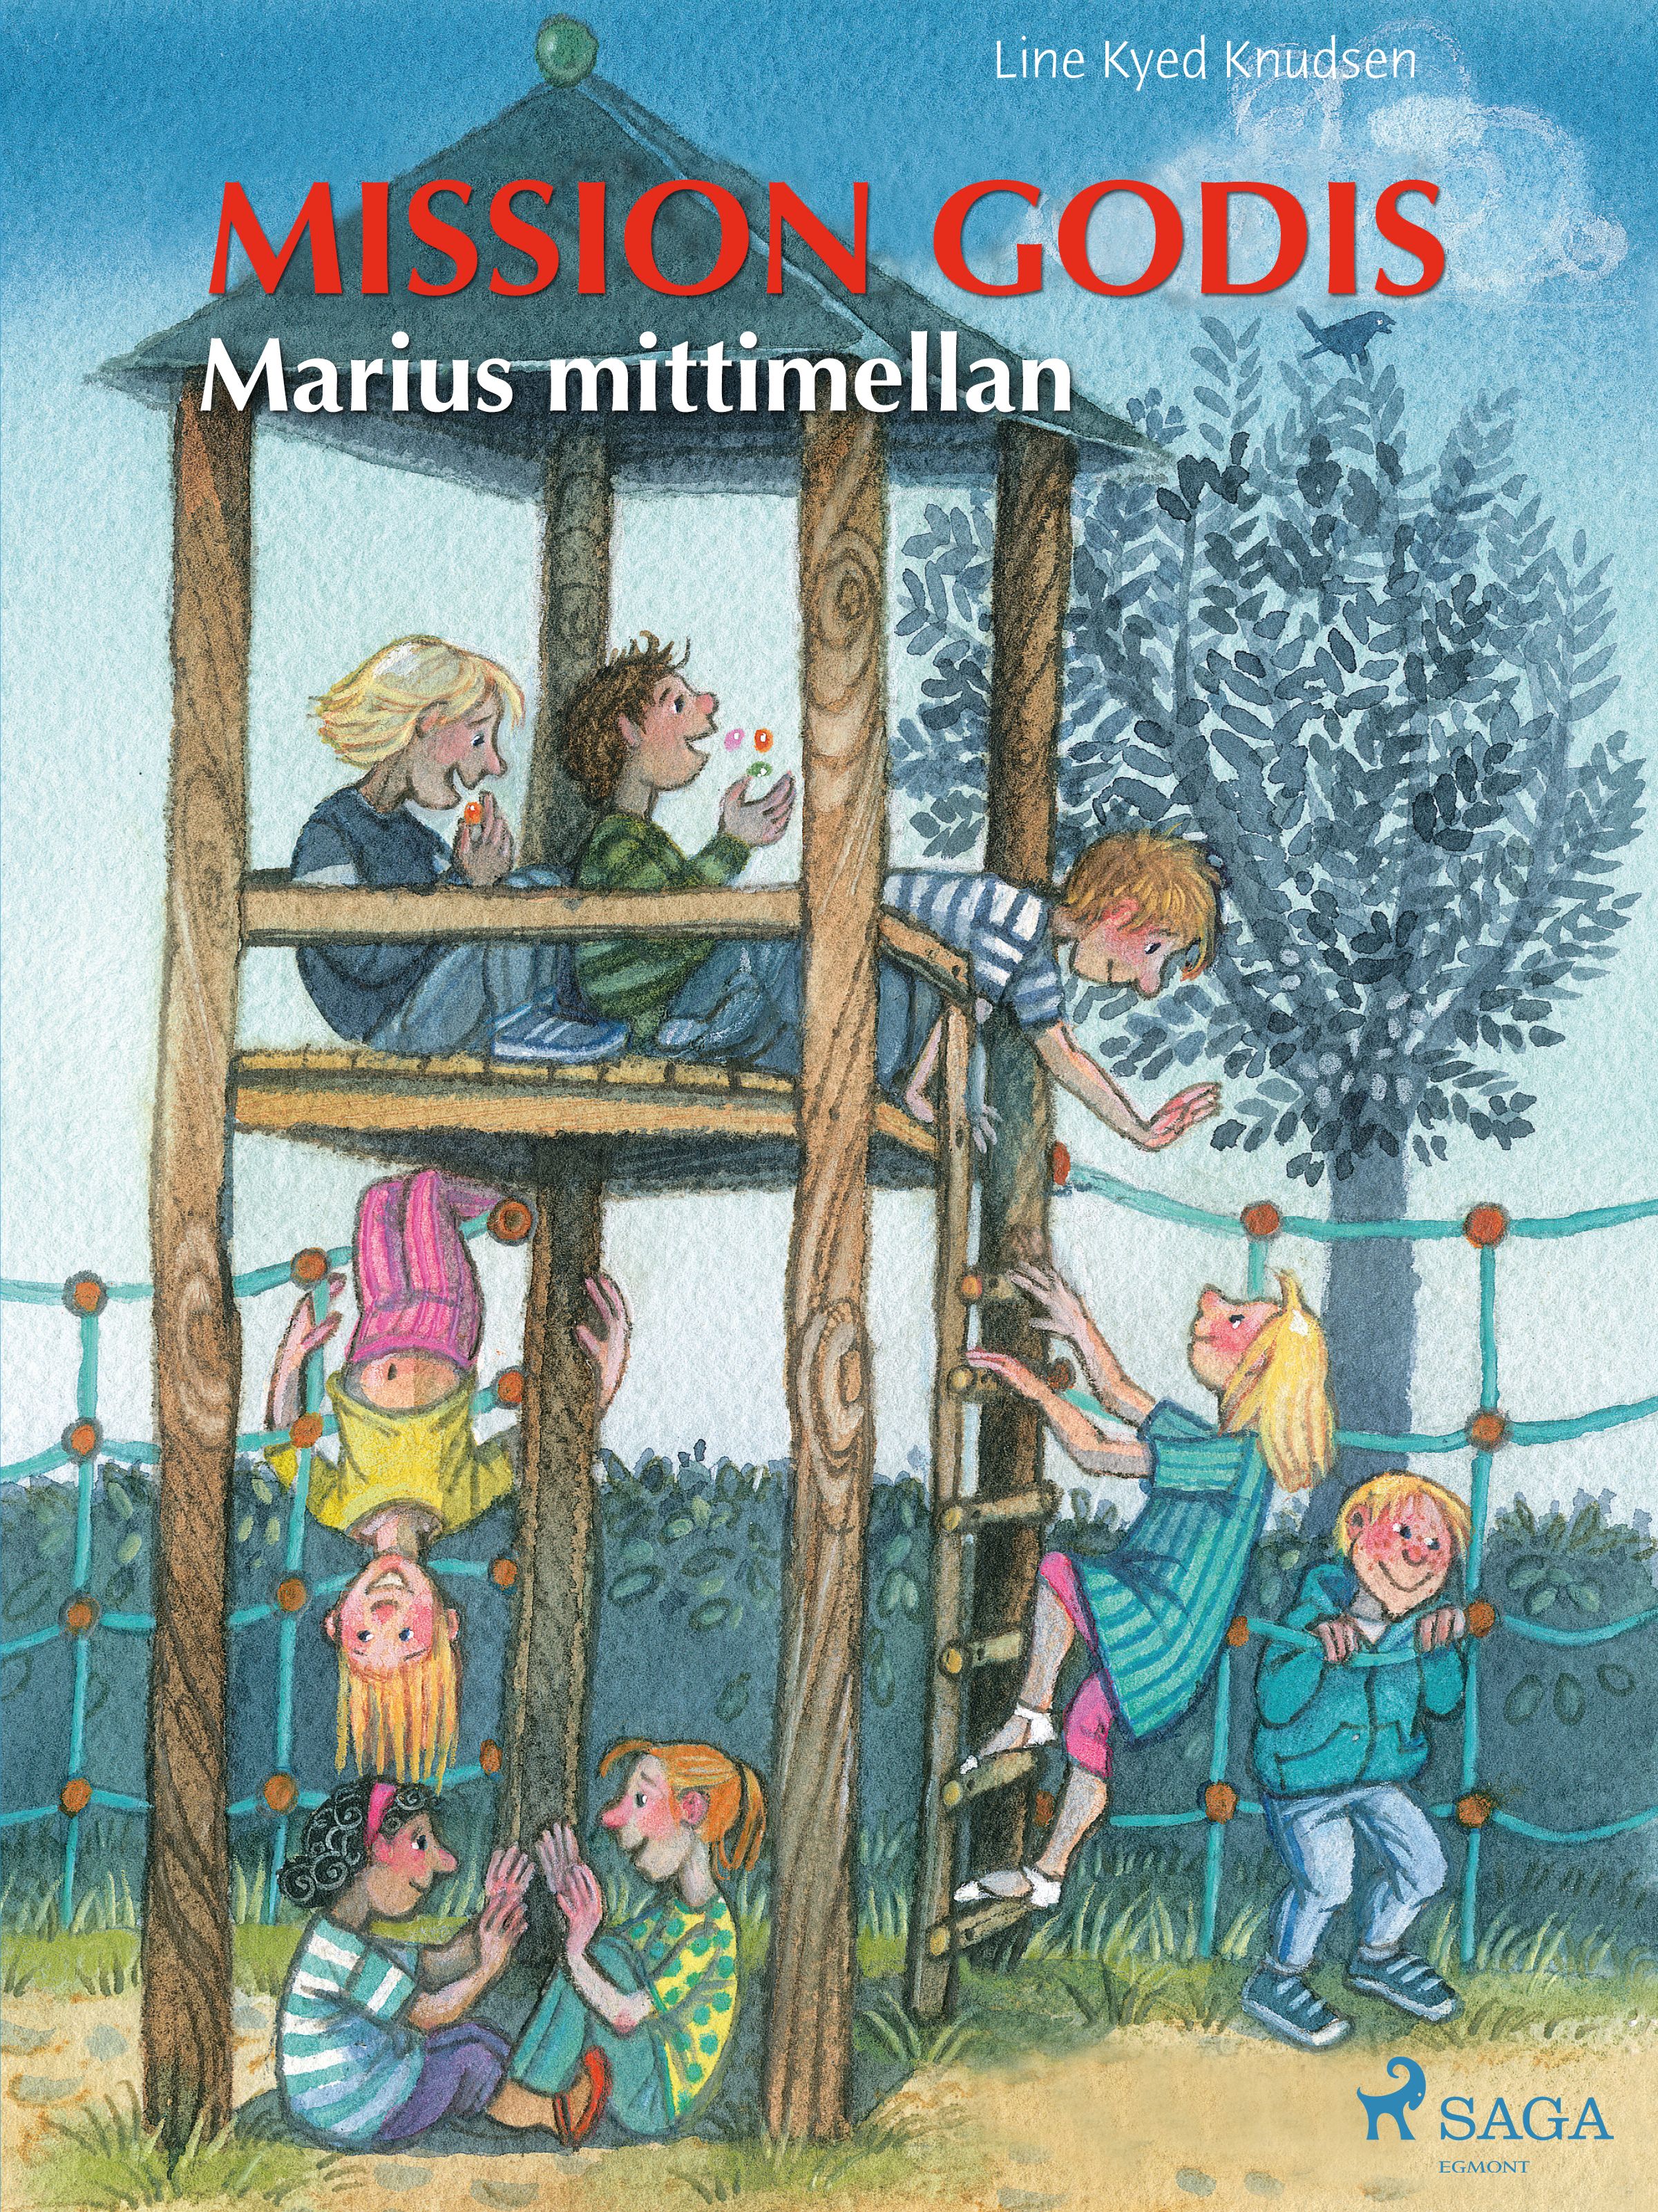 Marius mittimellan: Mission Godis, eBook by Line Kyed Knudsen